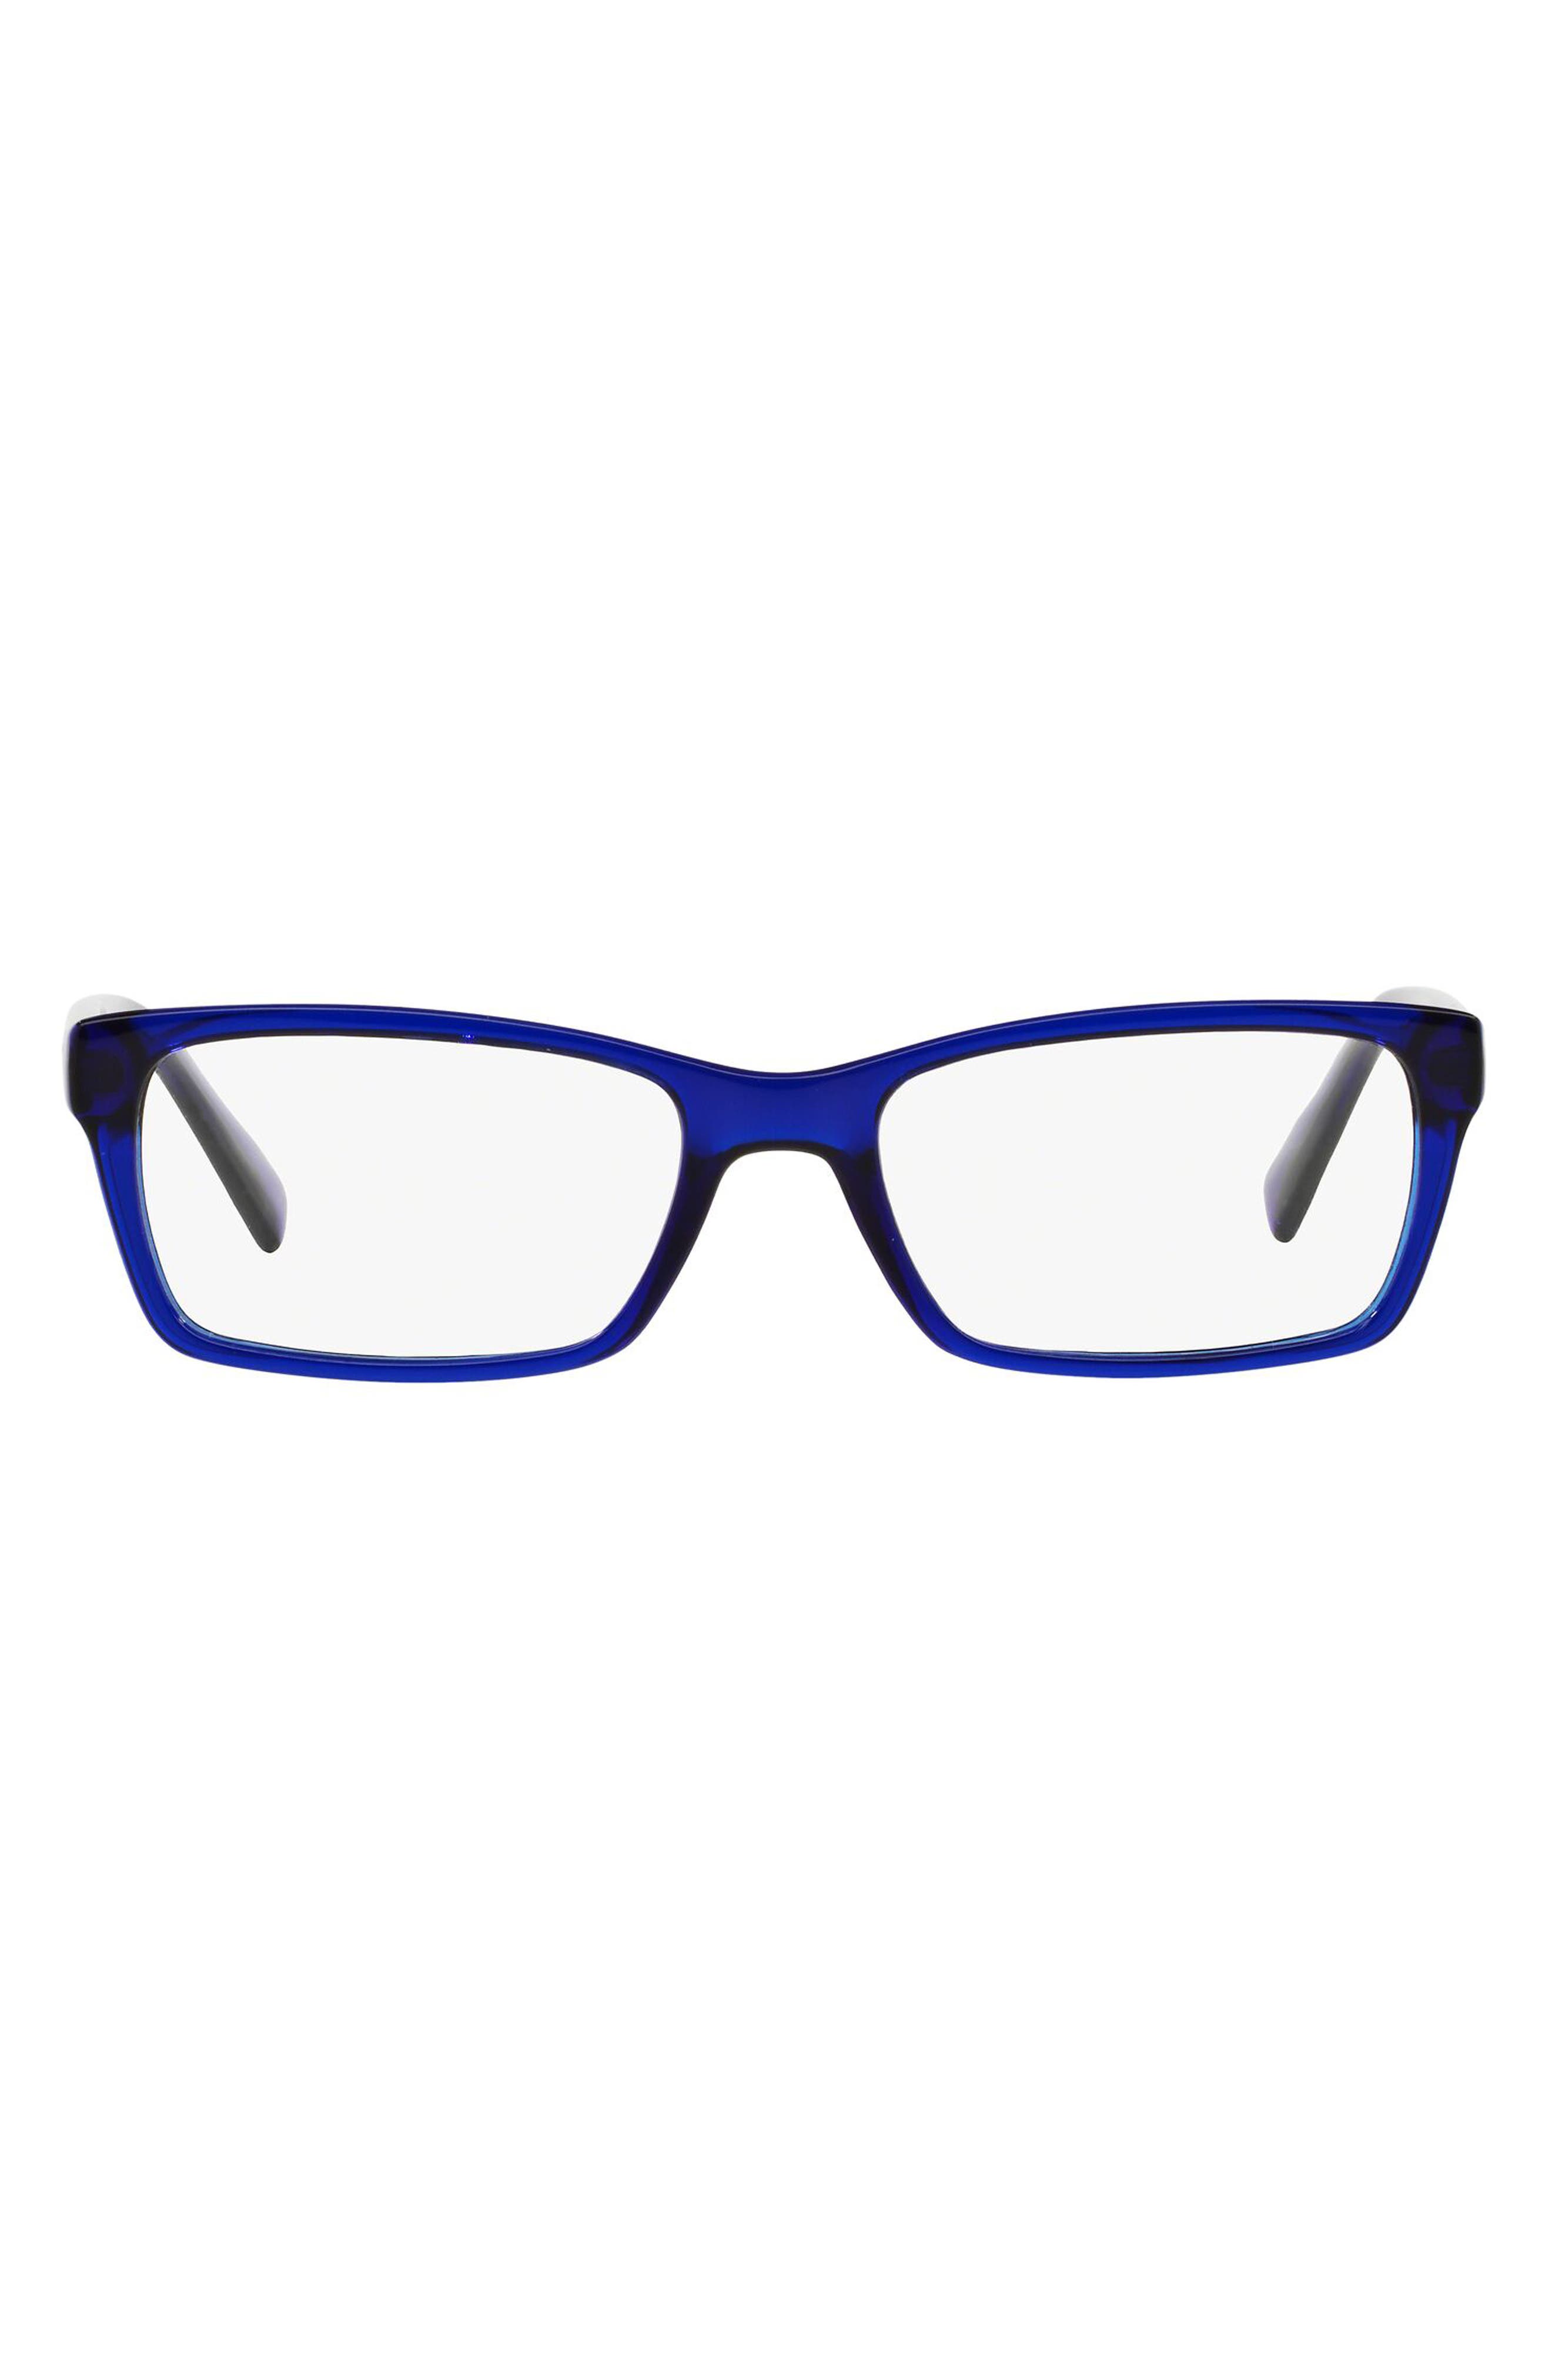 EAN 8053672050080 product image for Men's Ax Armani Exchange 53mm Rectangular Optical Glasses - Dark Blue | upcitemdb.com